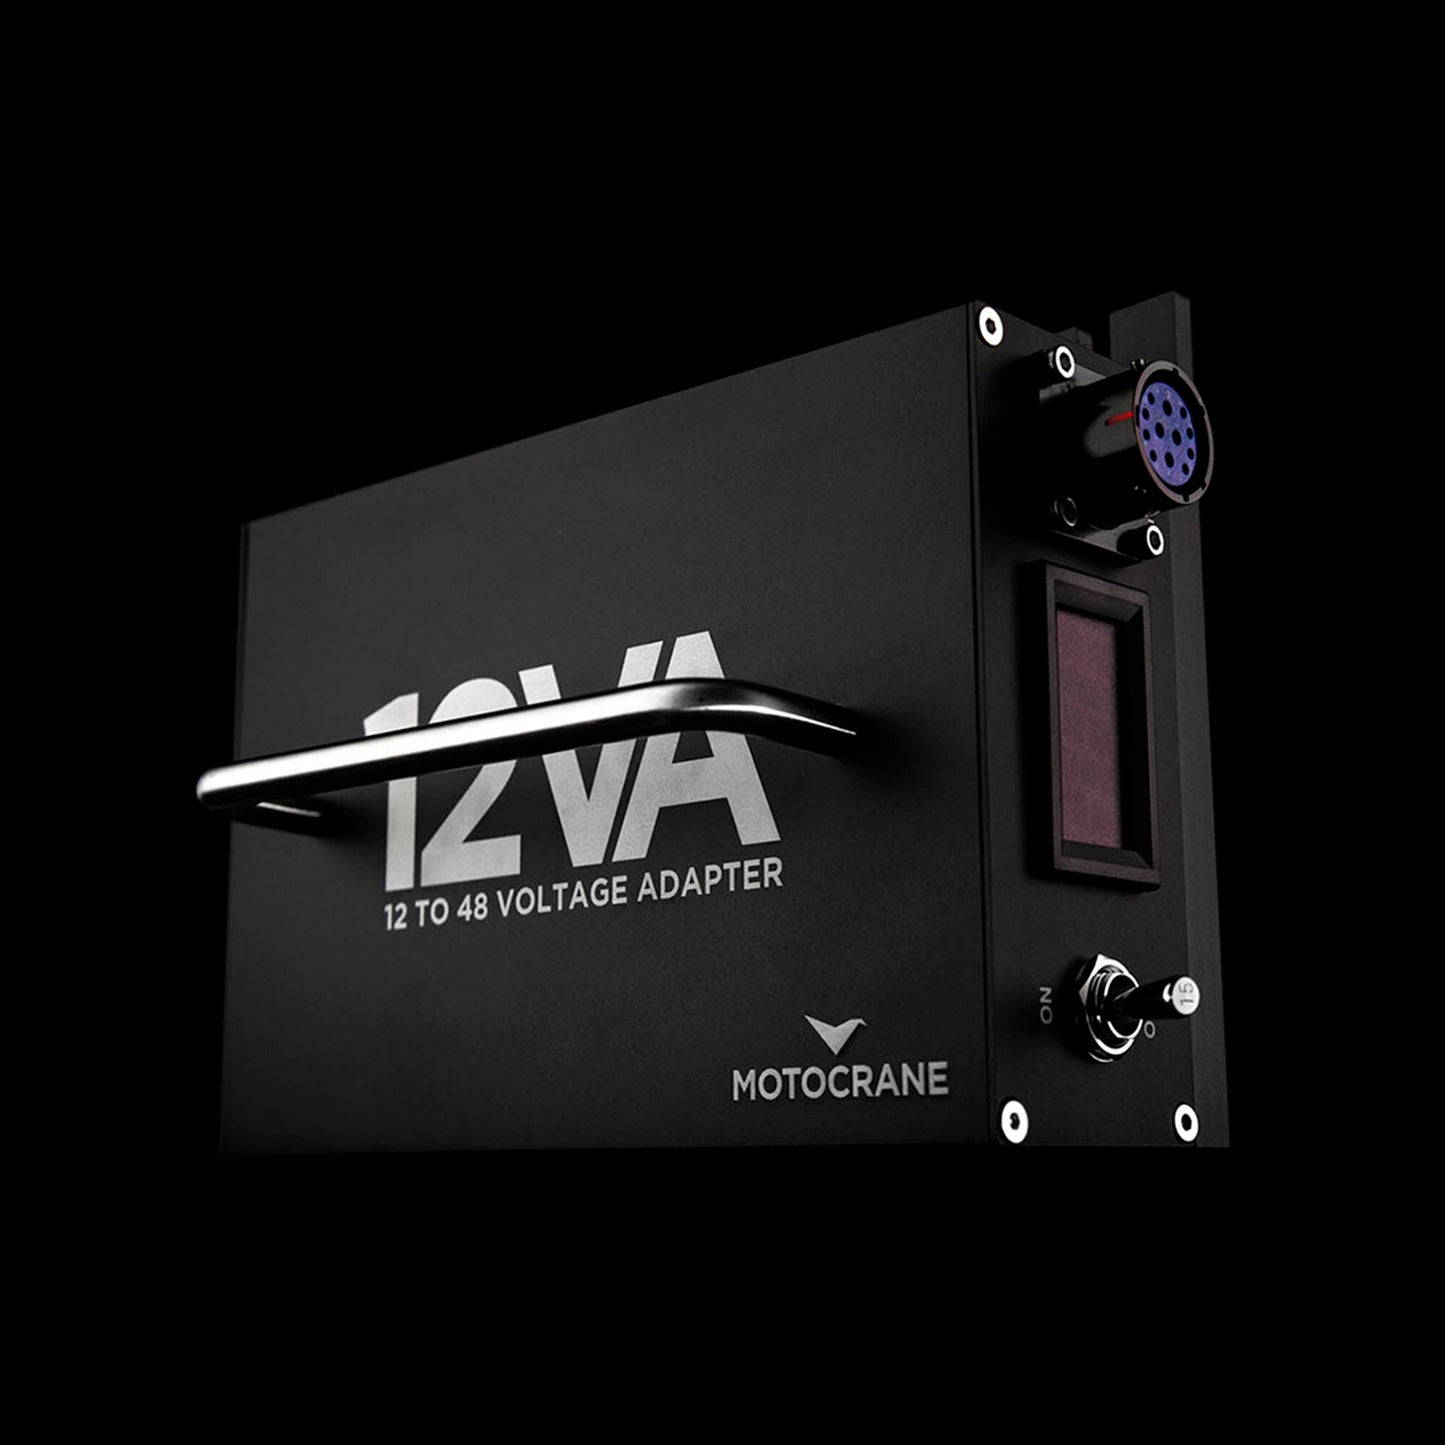 12VA (12 to 48 Voltage Adapter)